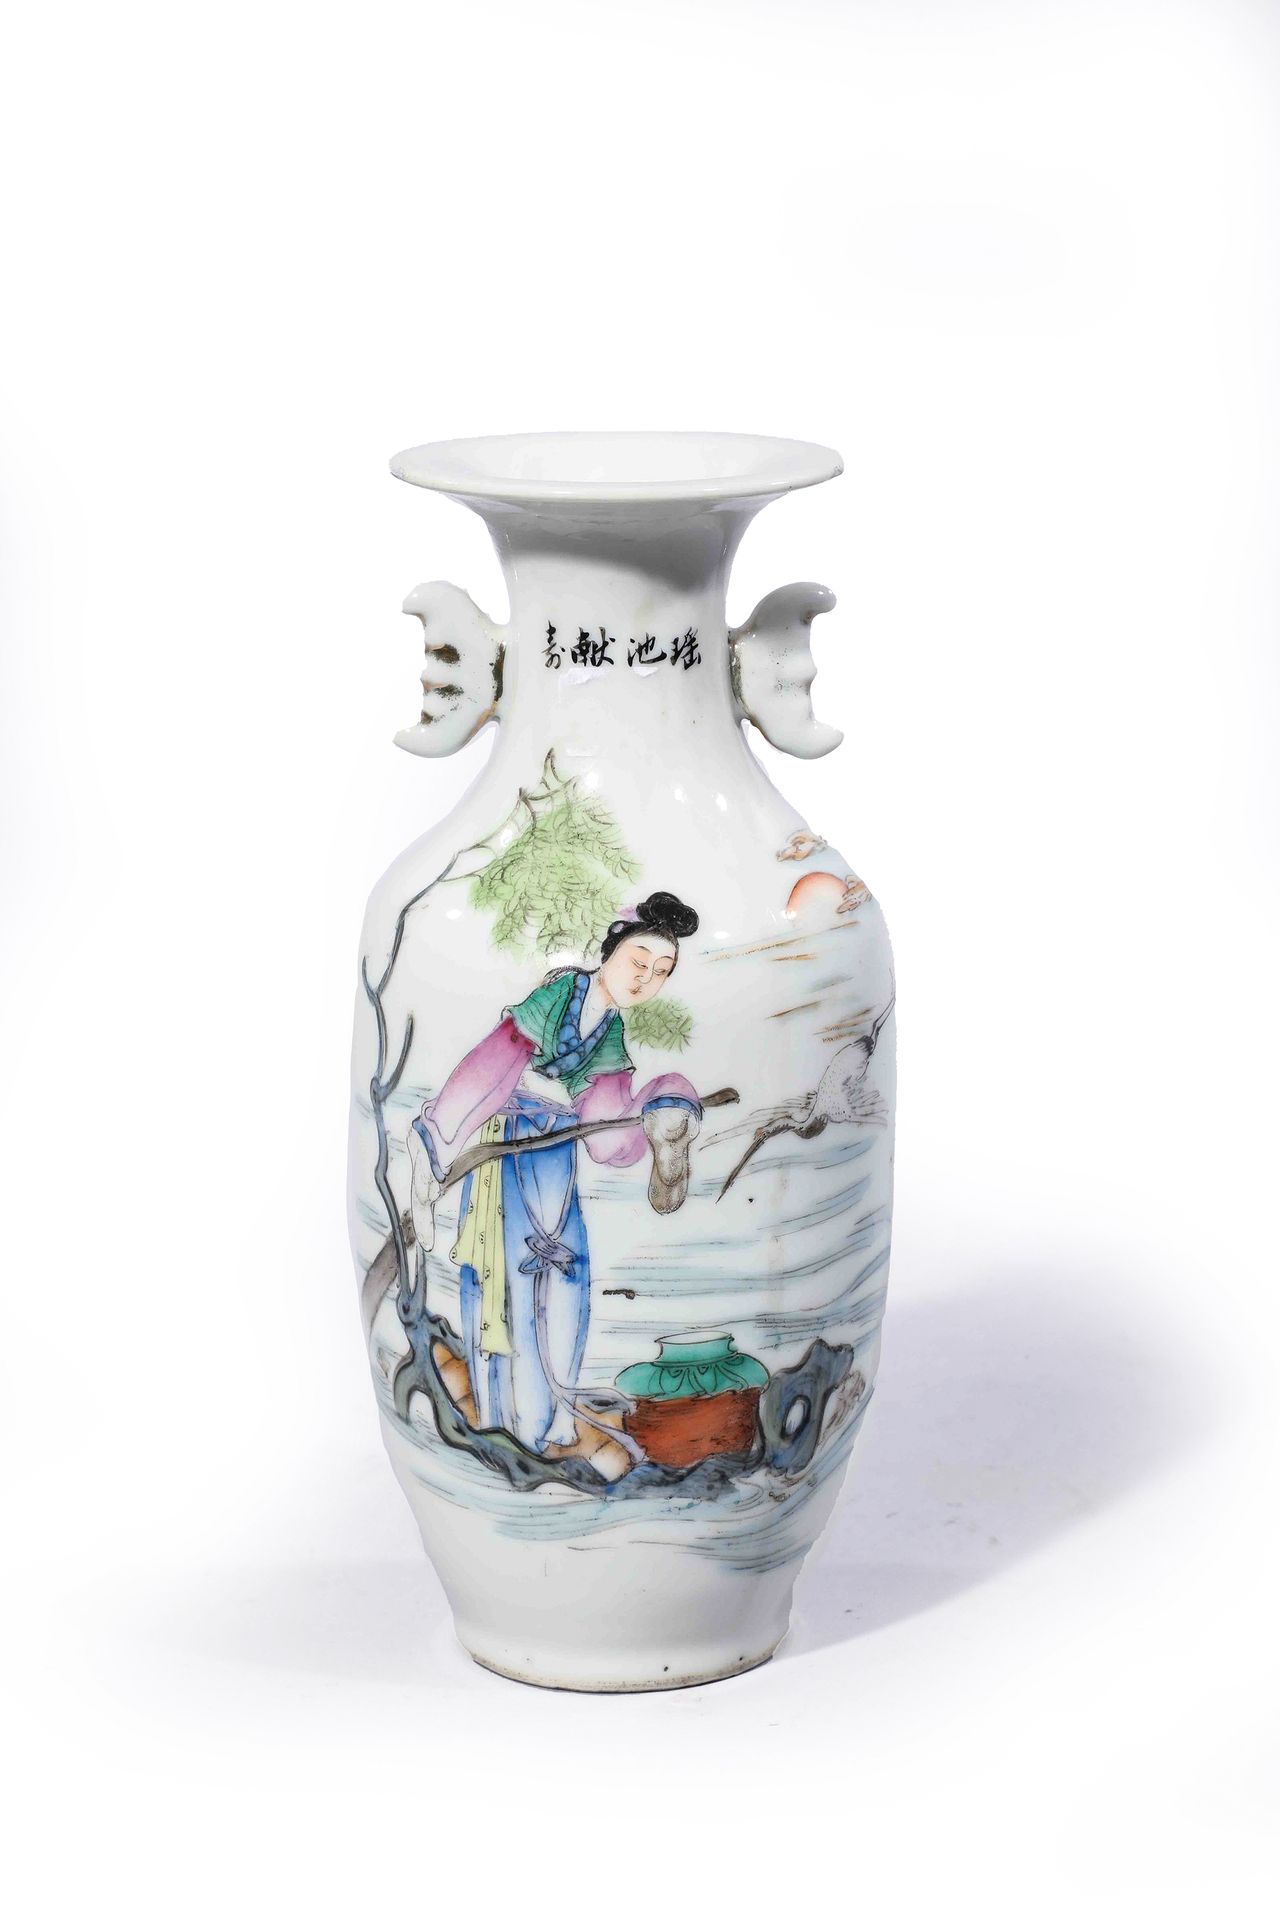 Null 
瓷器花瓶上装饰着

的人物。

中国 20世纪

H.23厘米